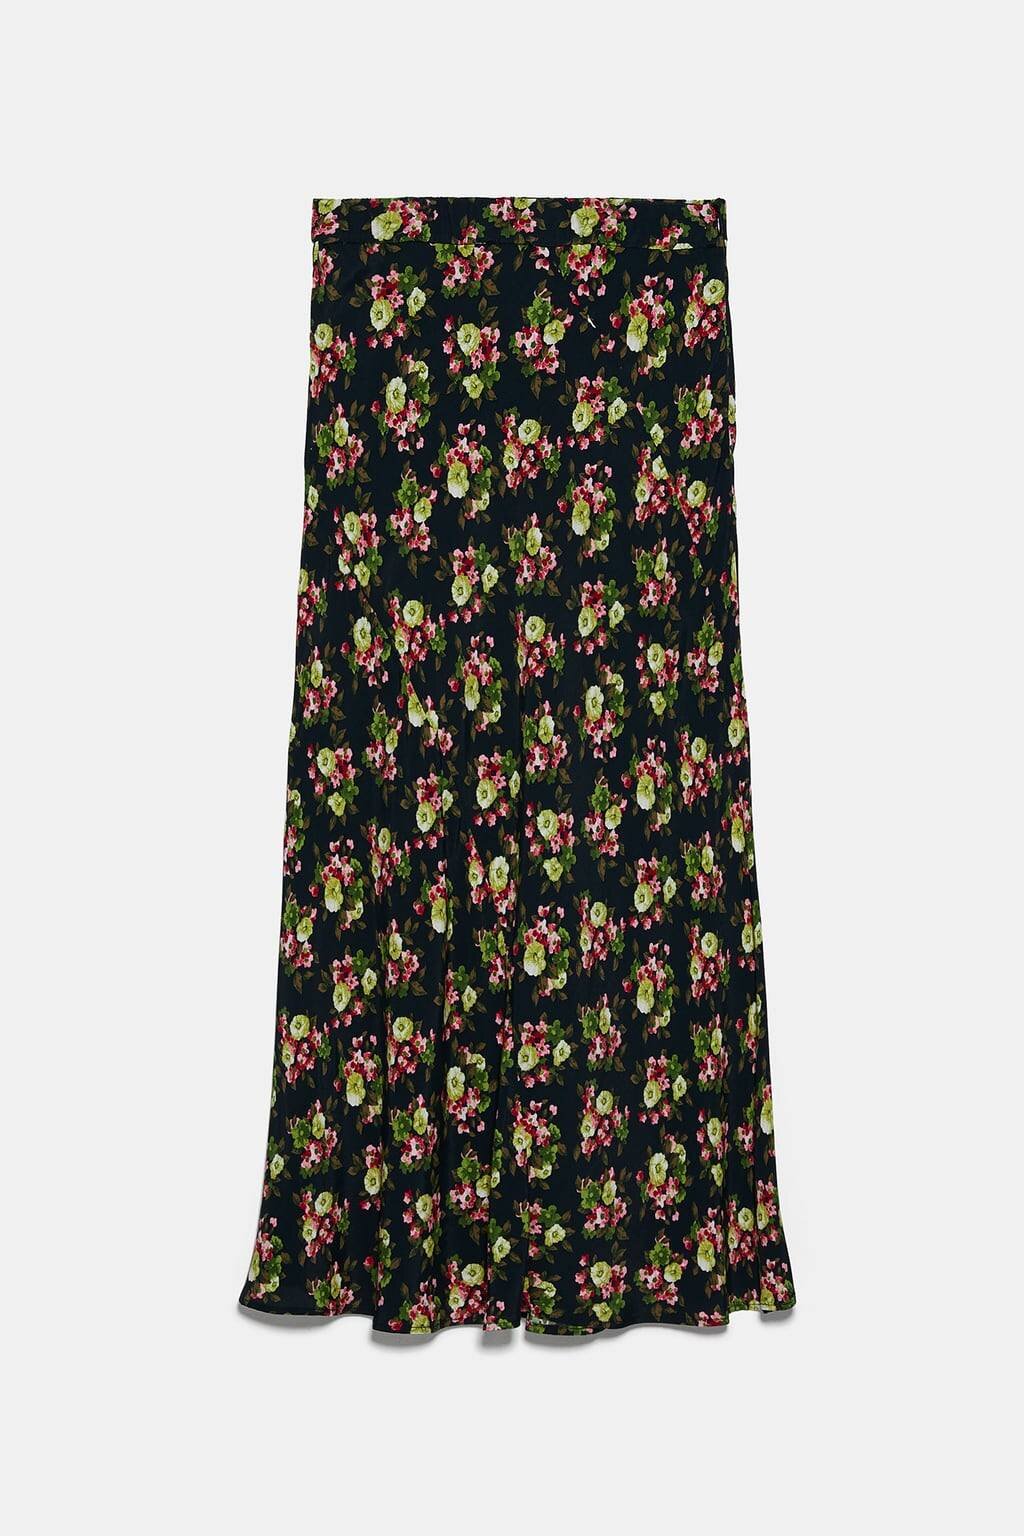 Zara Floral Print Skirt — UFO No More